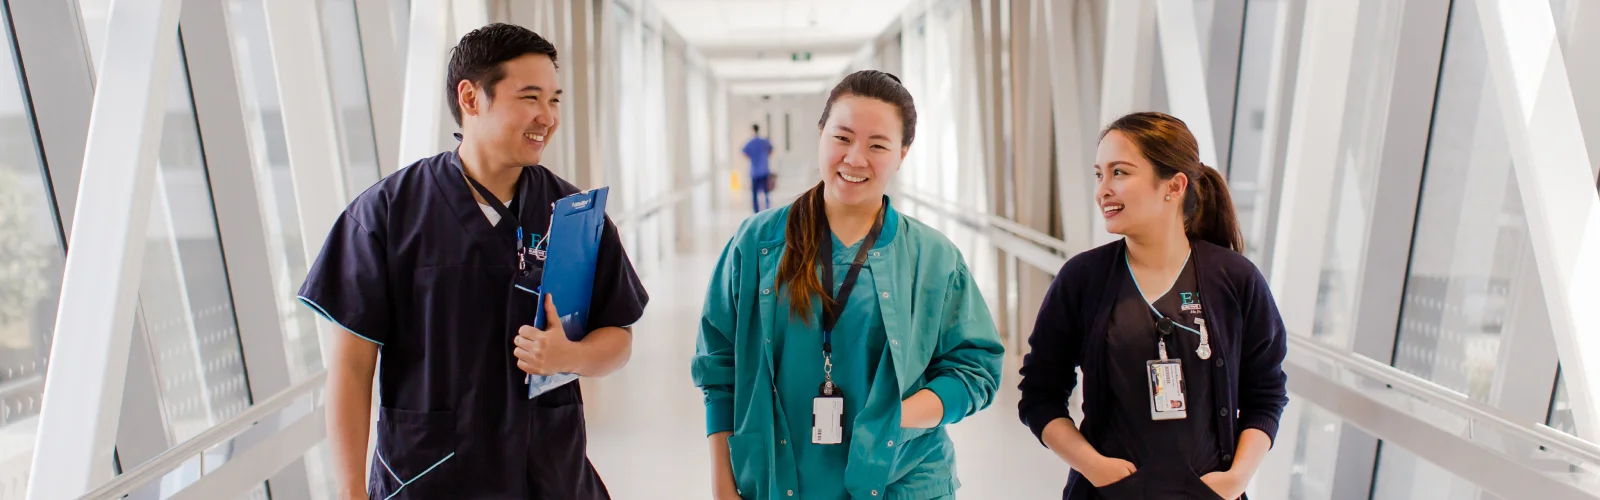 Elective Surgery Centre nurses - Health New Zealand